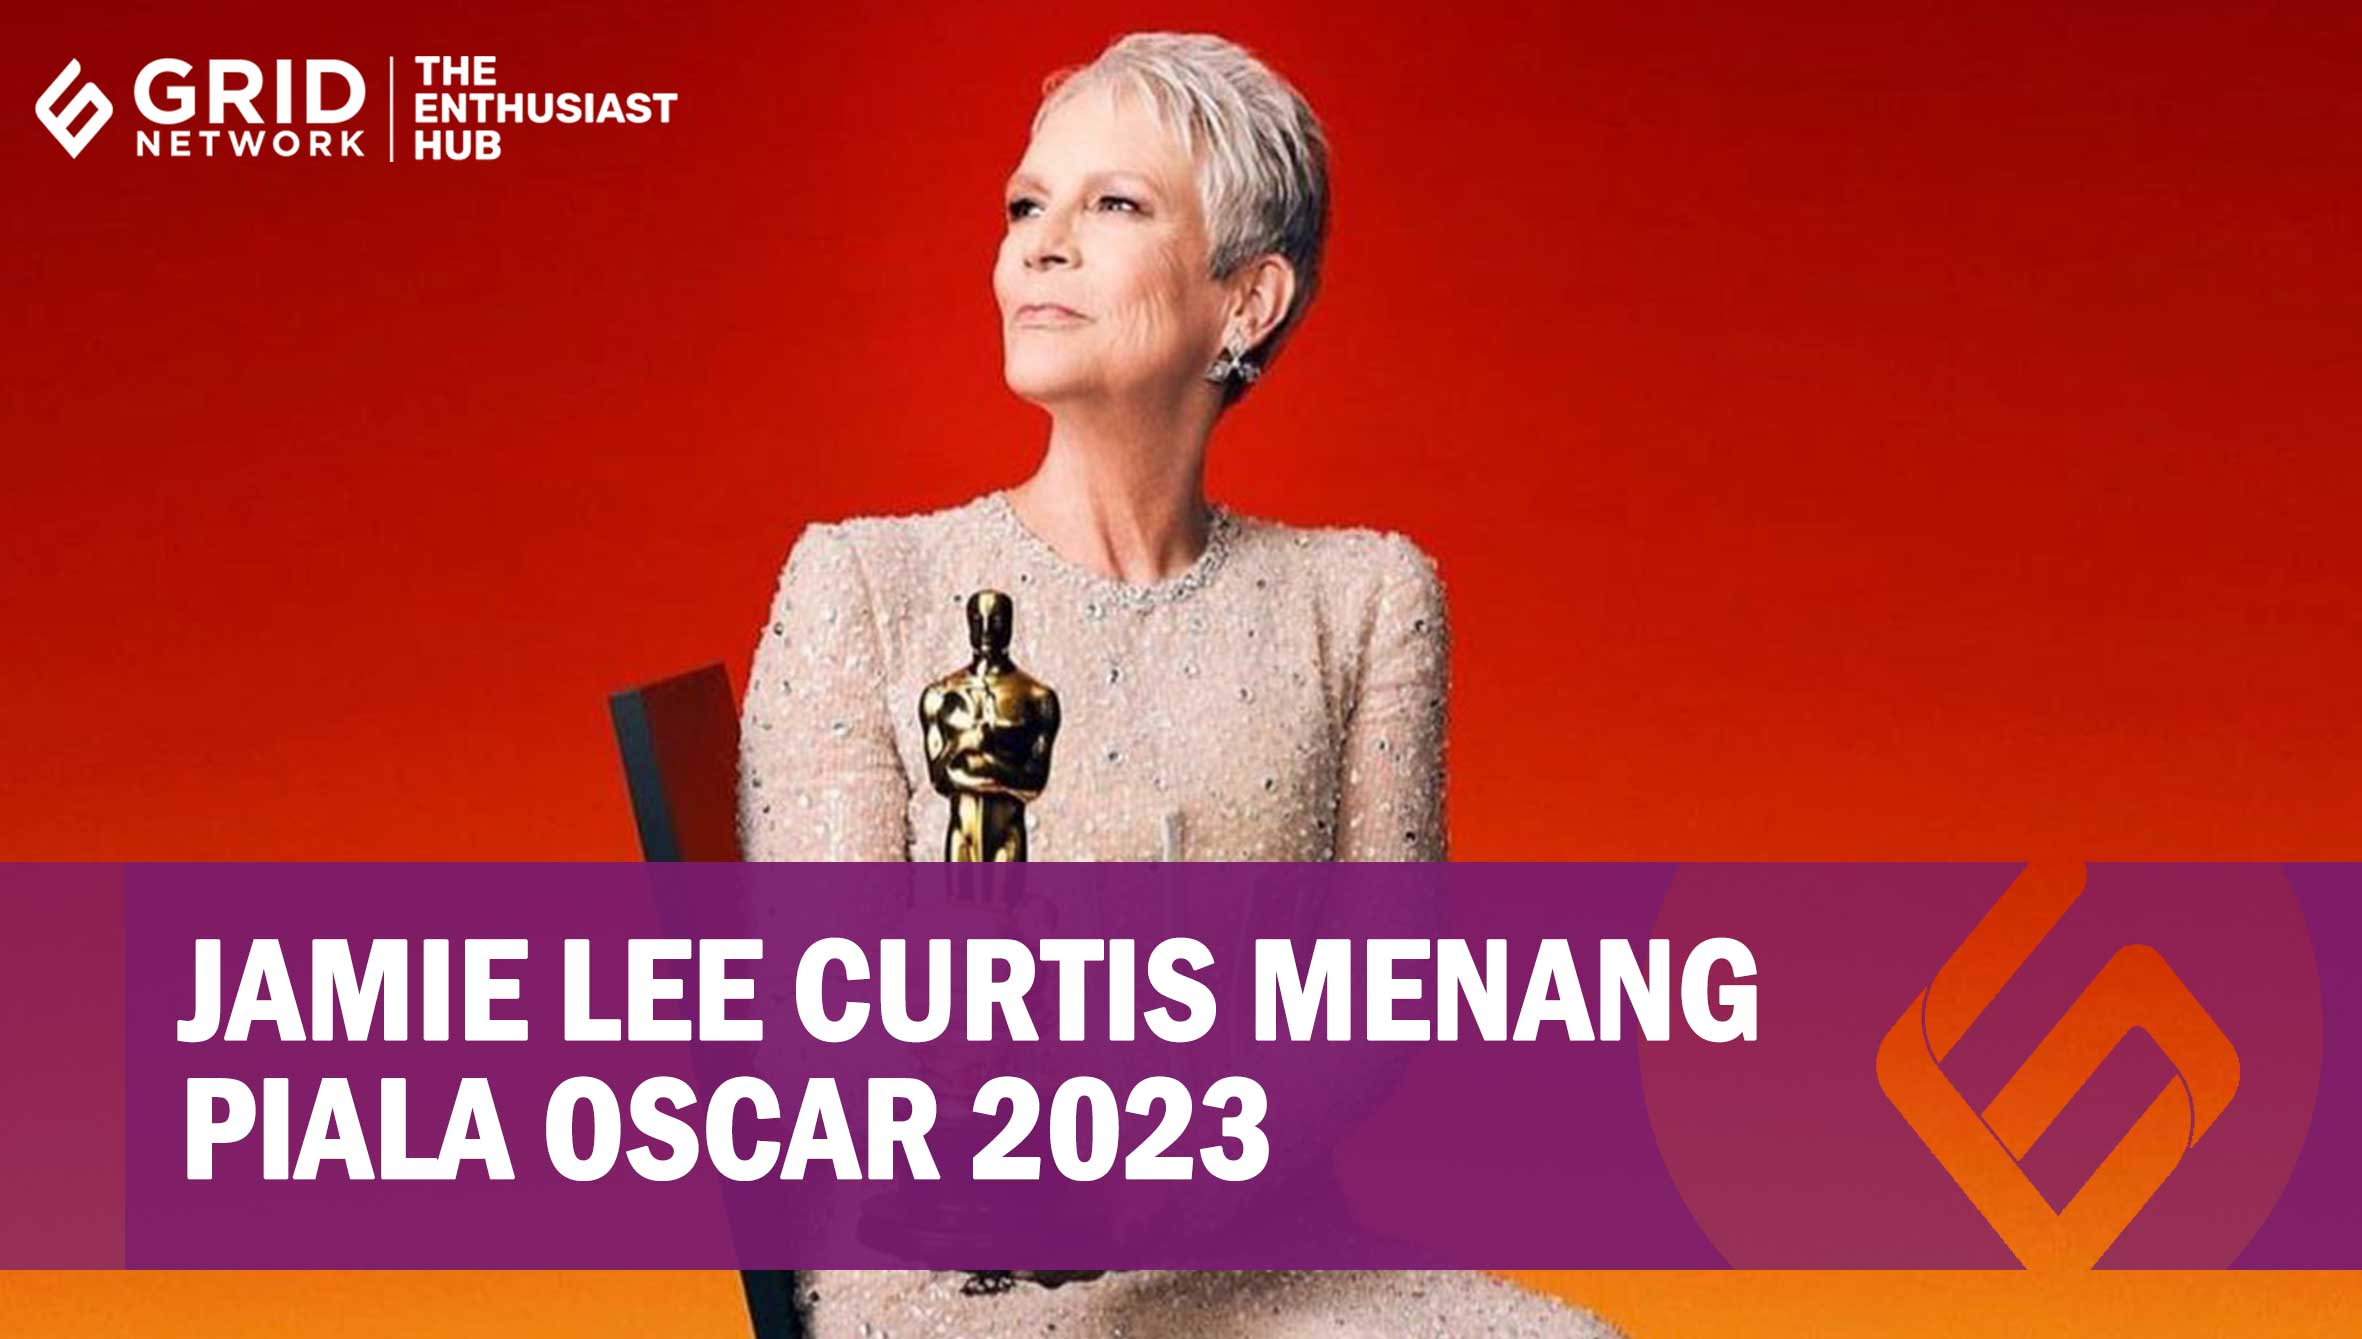 Jamie Lee Curtis Menang Piala Oscar 2023, Sampaikan Pidato Emosional.